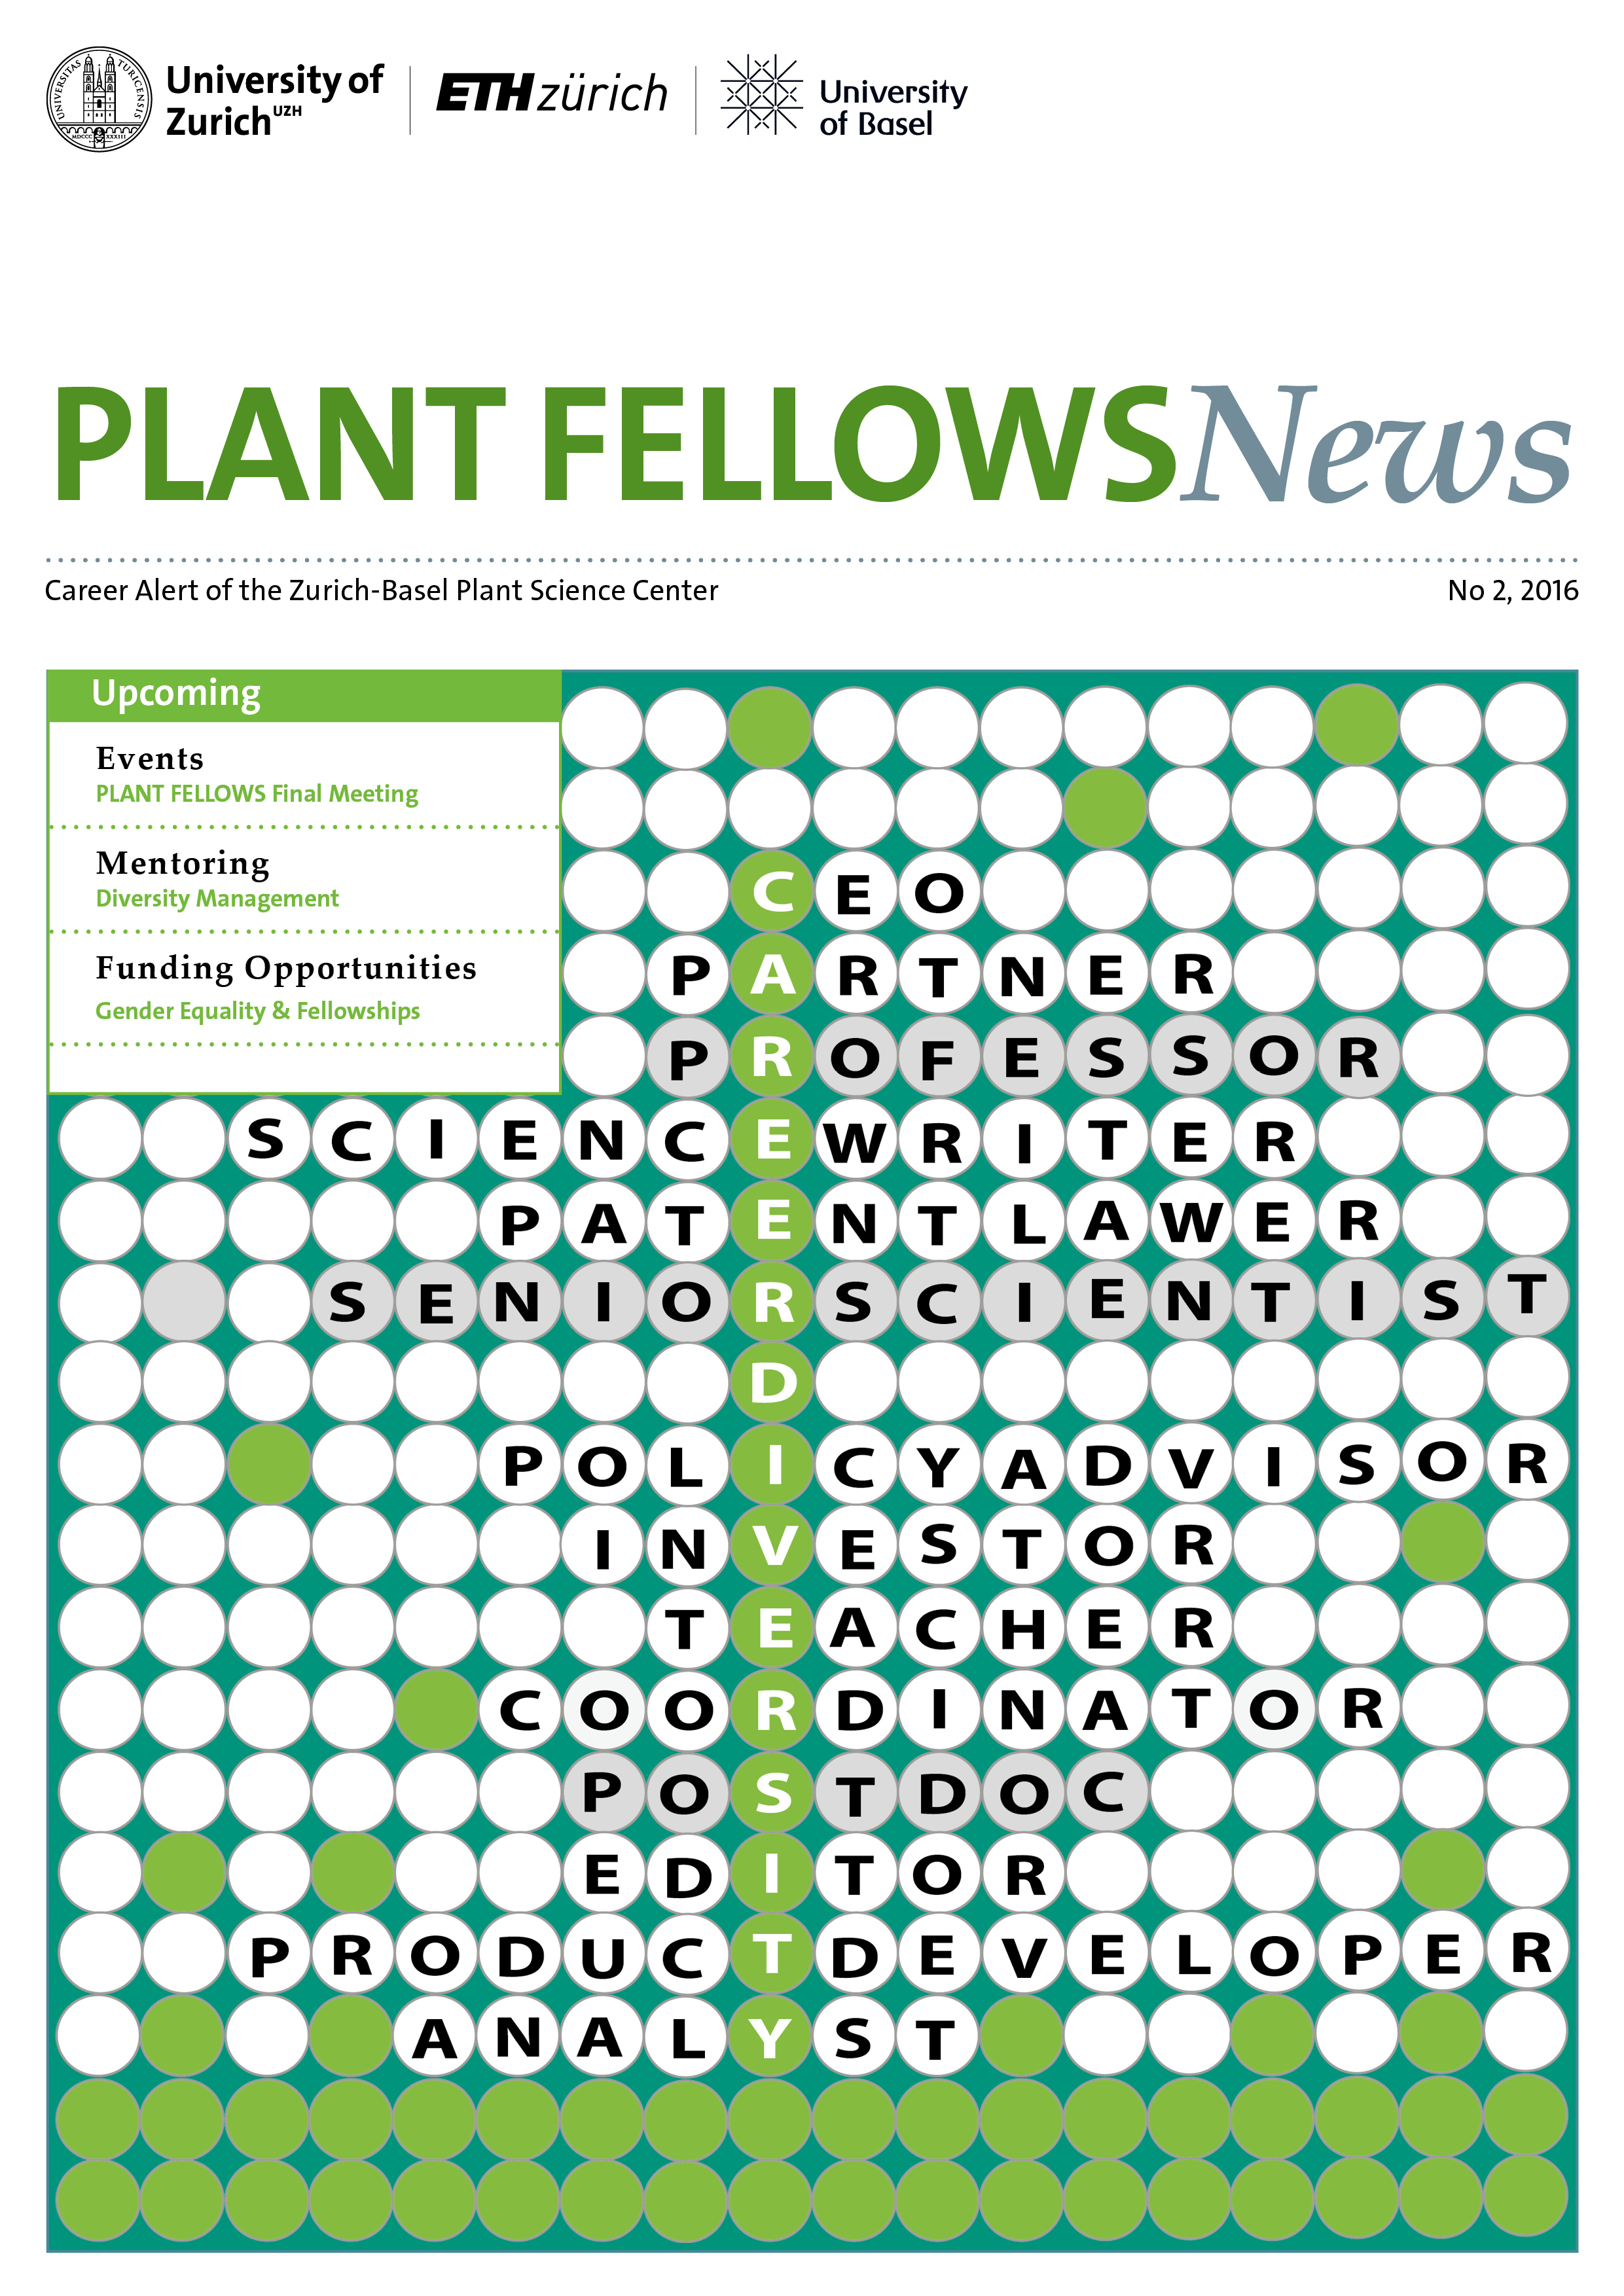 Plant Fellows career alert